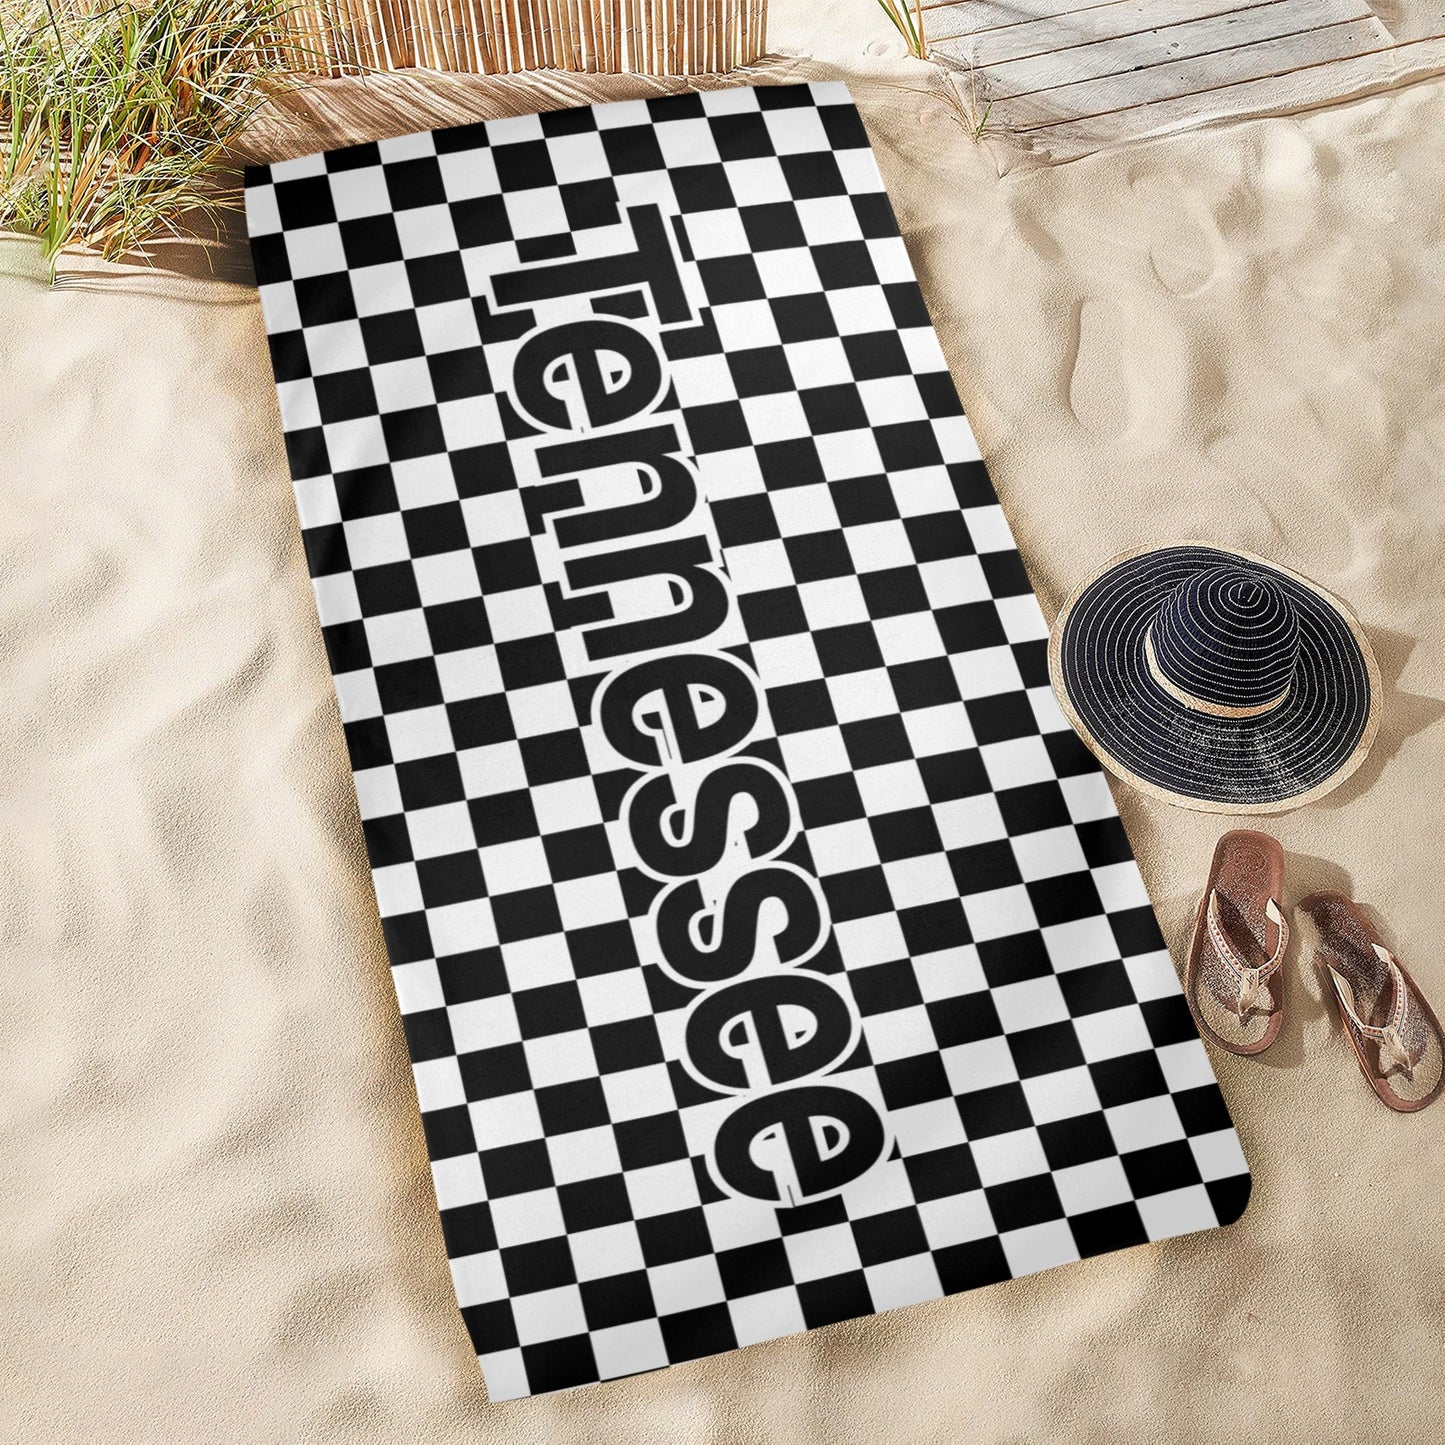 Custom Personalized Beach Towel, Name Checkered Black White Pool Microfiber Large Swim Luxury Quick Dry Kids Adult Men Women Cotton Blanket